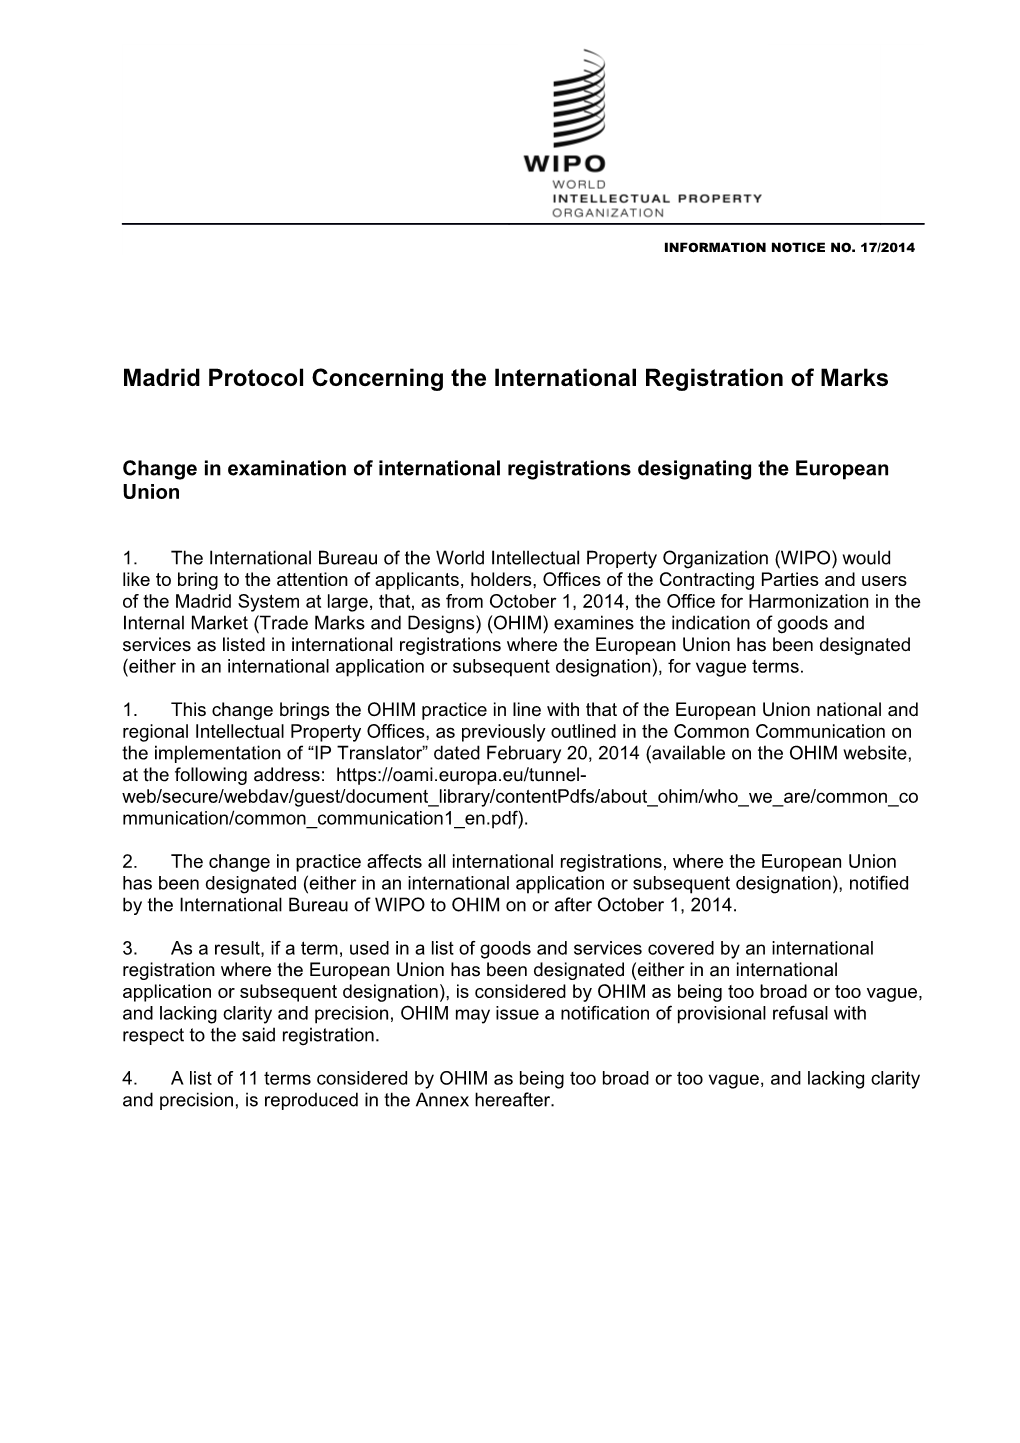 Change in Examination of International Registrations Designating the European Union